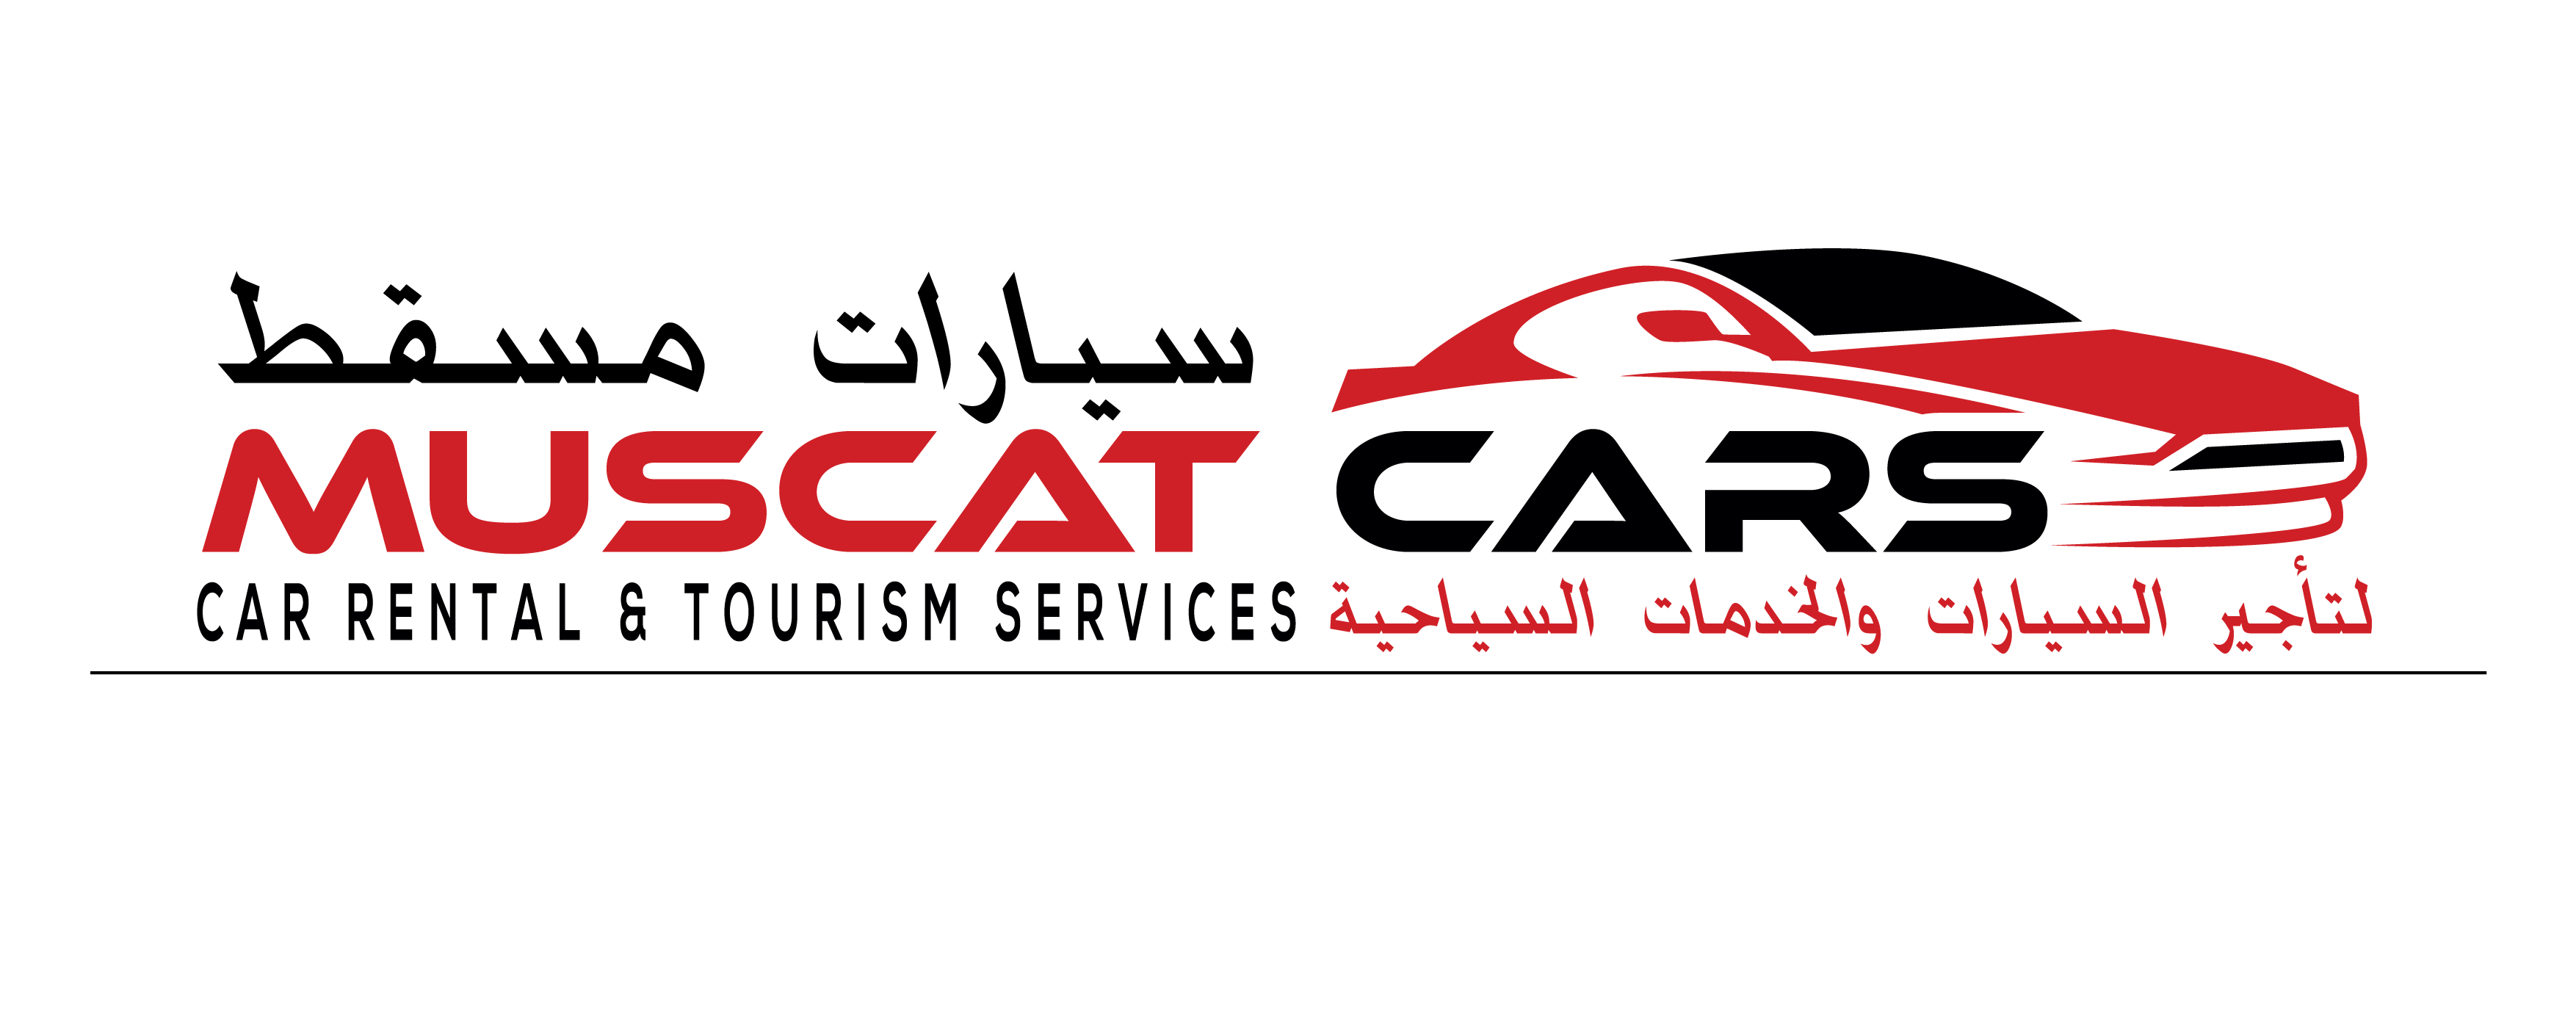 Muscat Cars Company